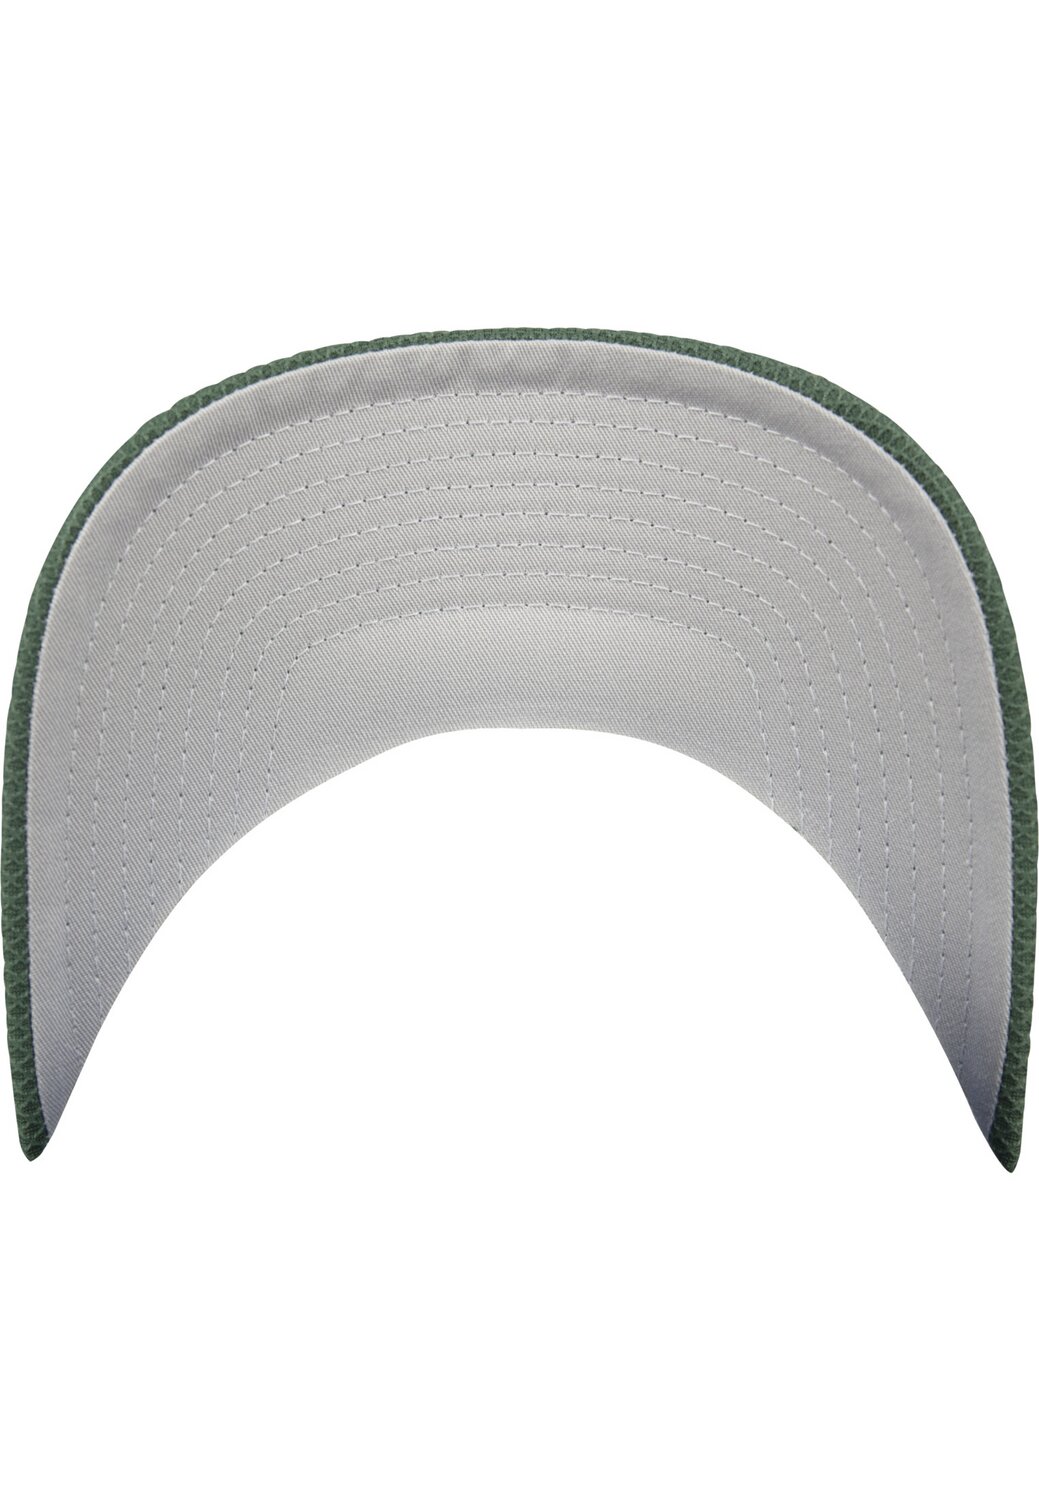 Baseball Cap 110 Flexfit Hybrid | green MAXISCOOT